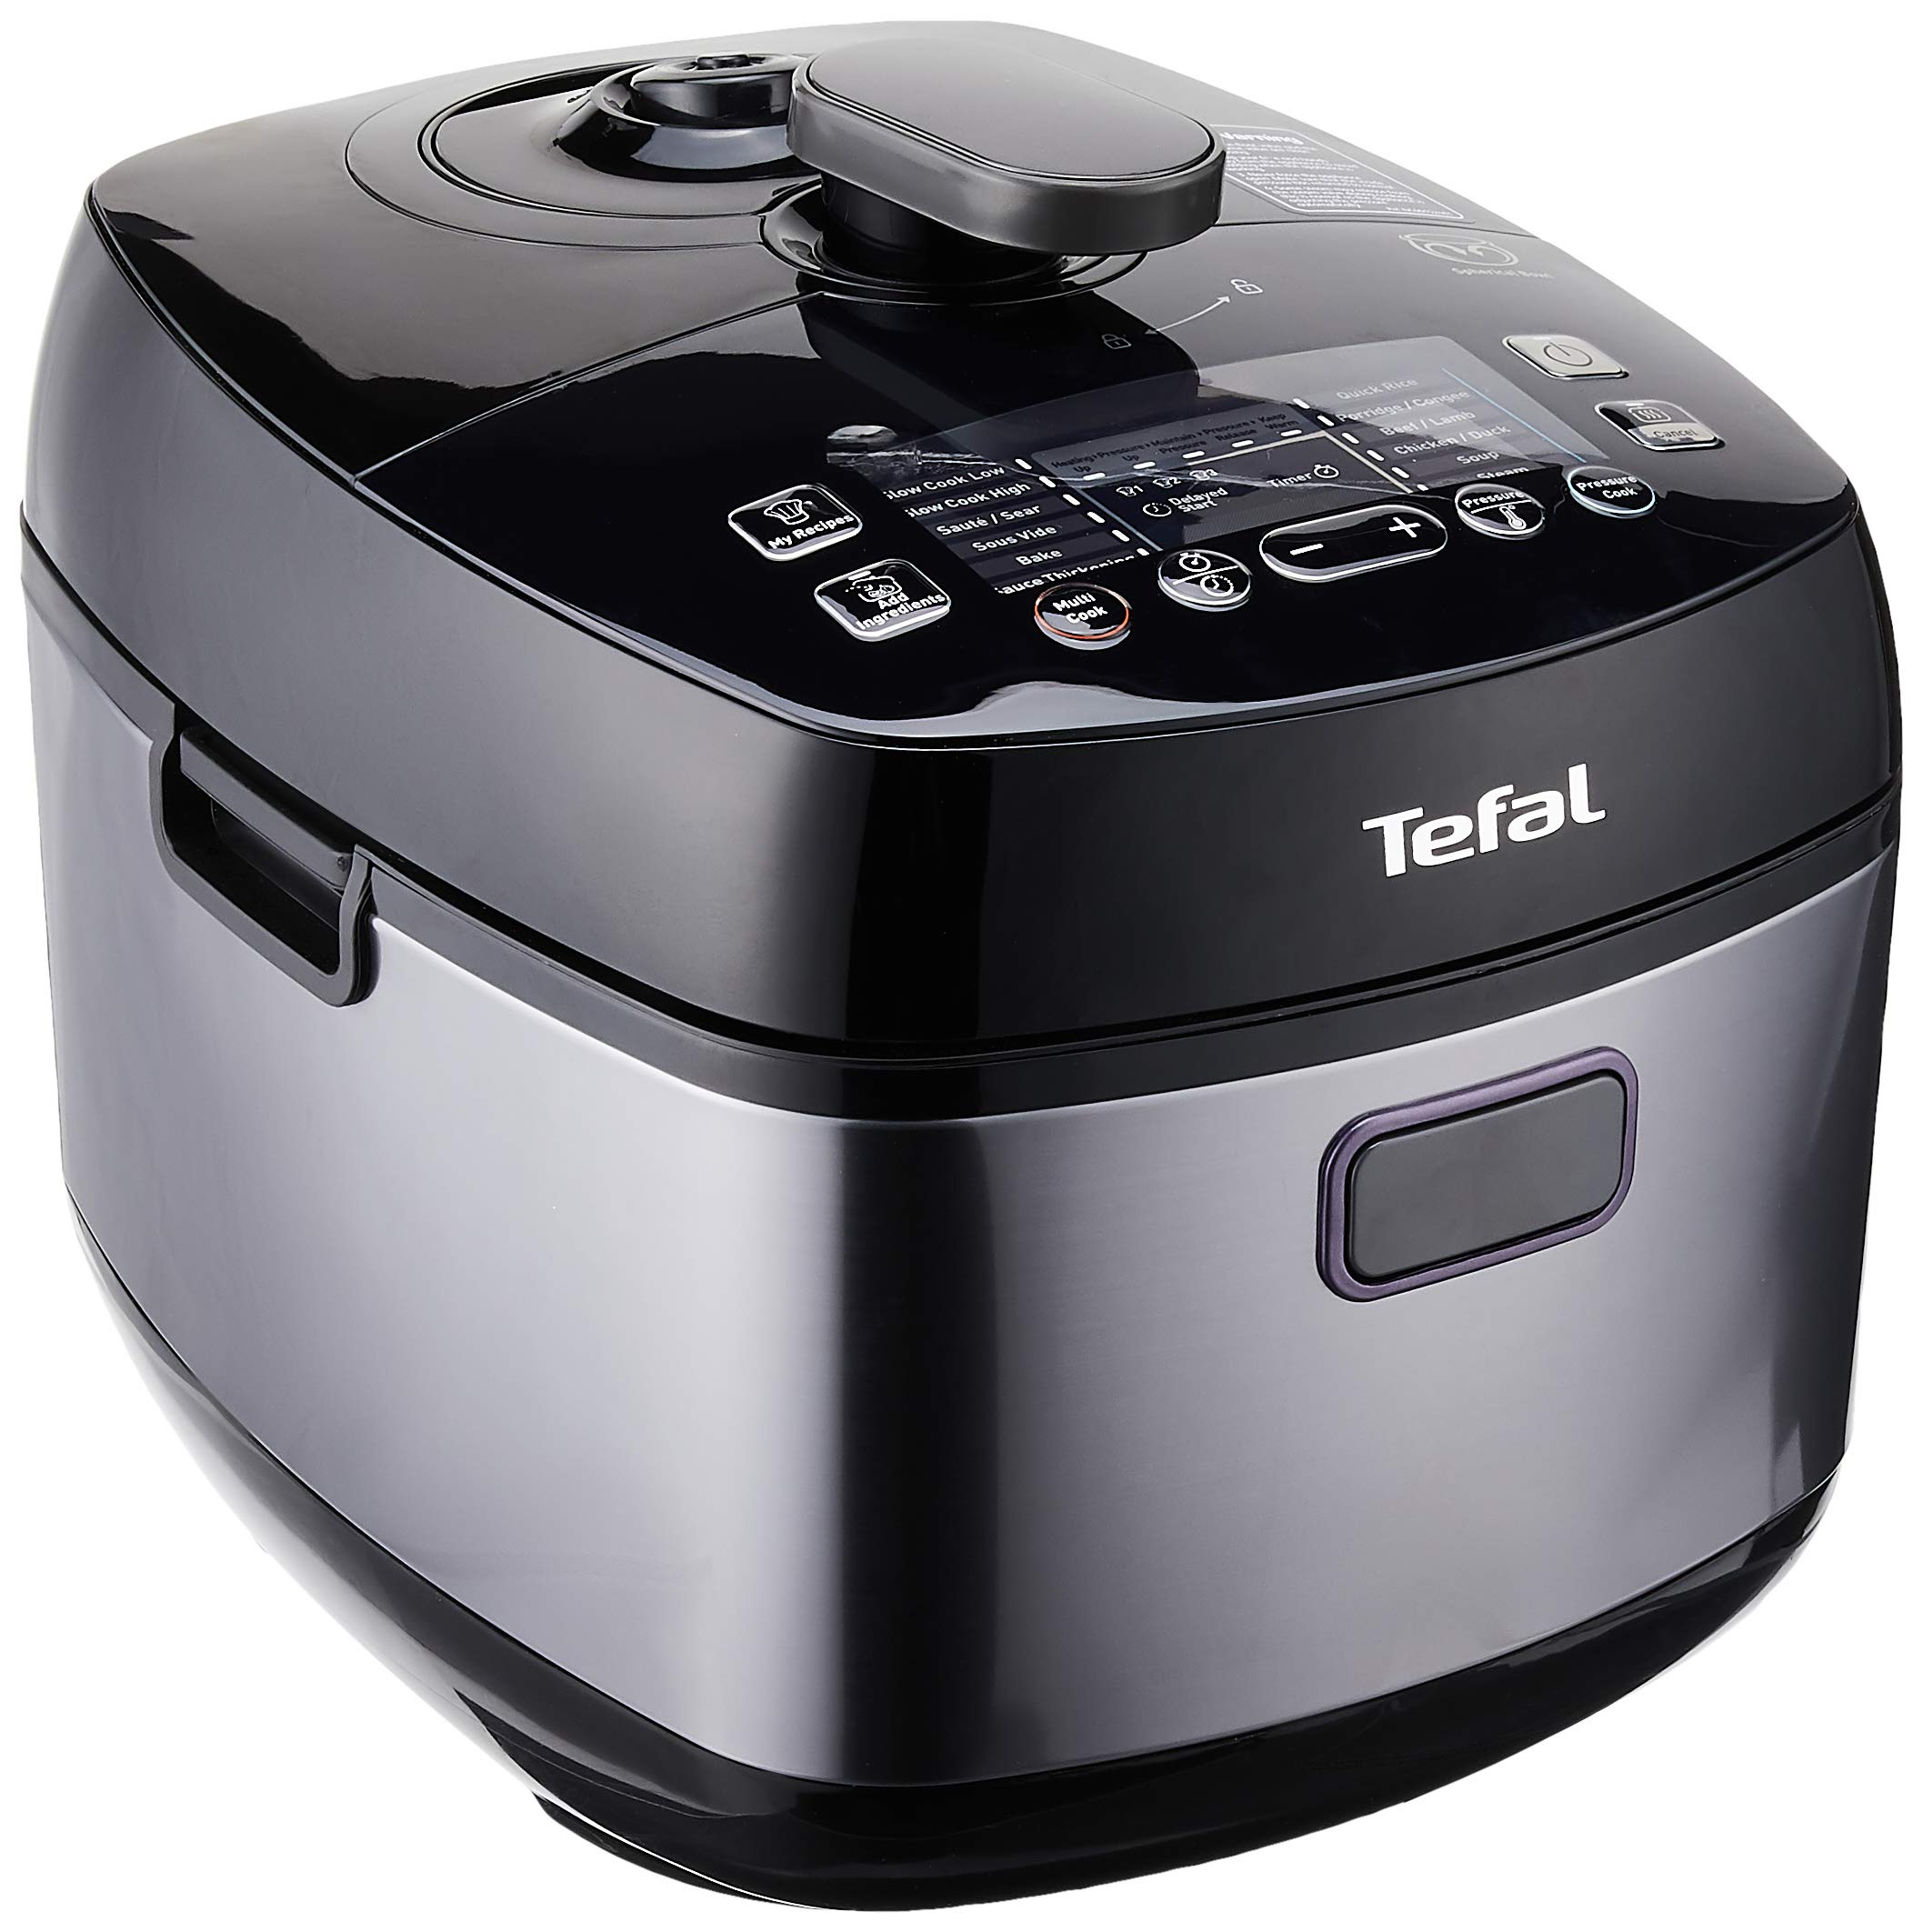 Tefal Home Chef Smart Pro Multicooker CY625, Black,5L, Featuring 19 pre-set programs,1090 W